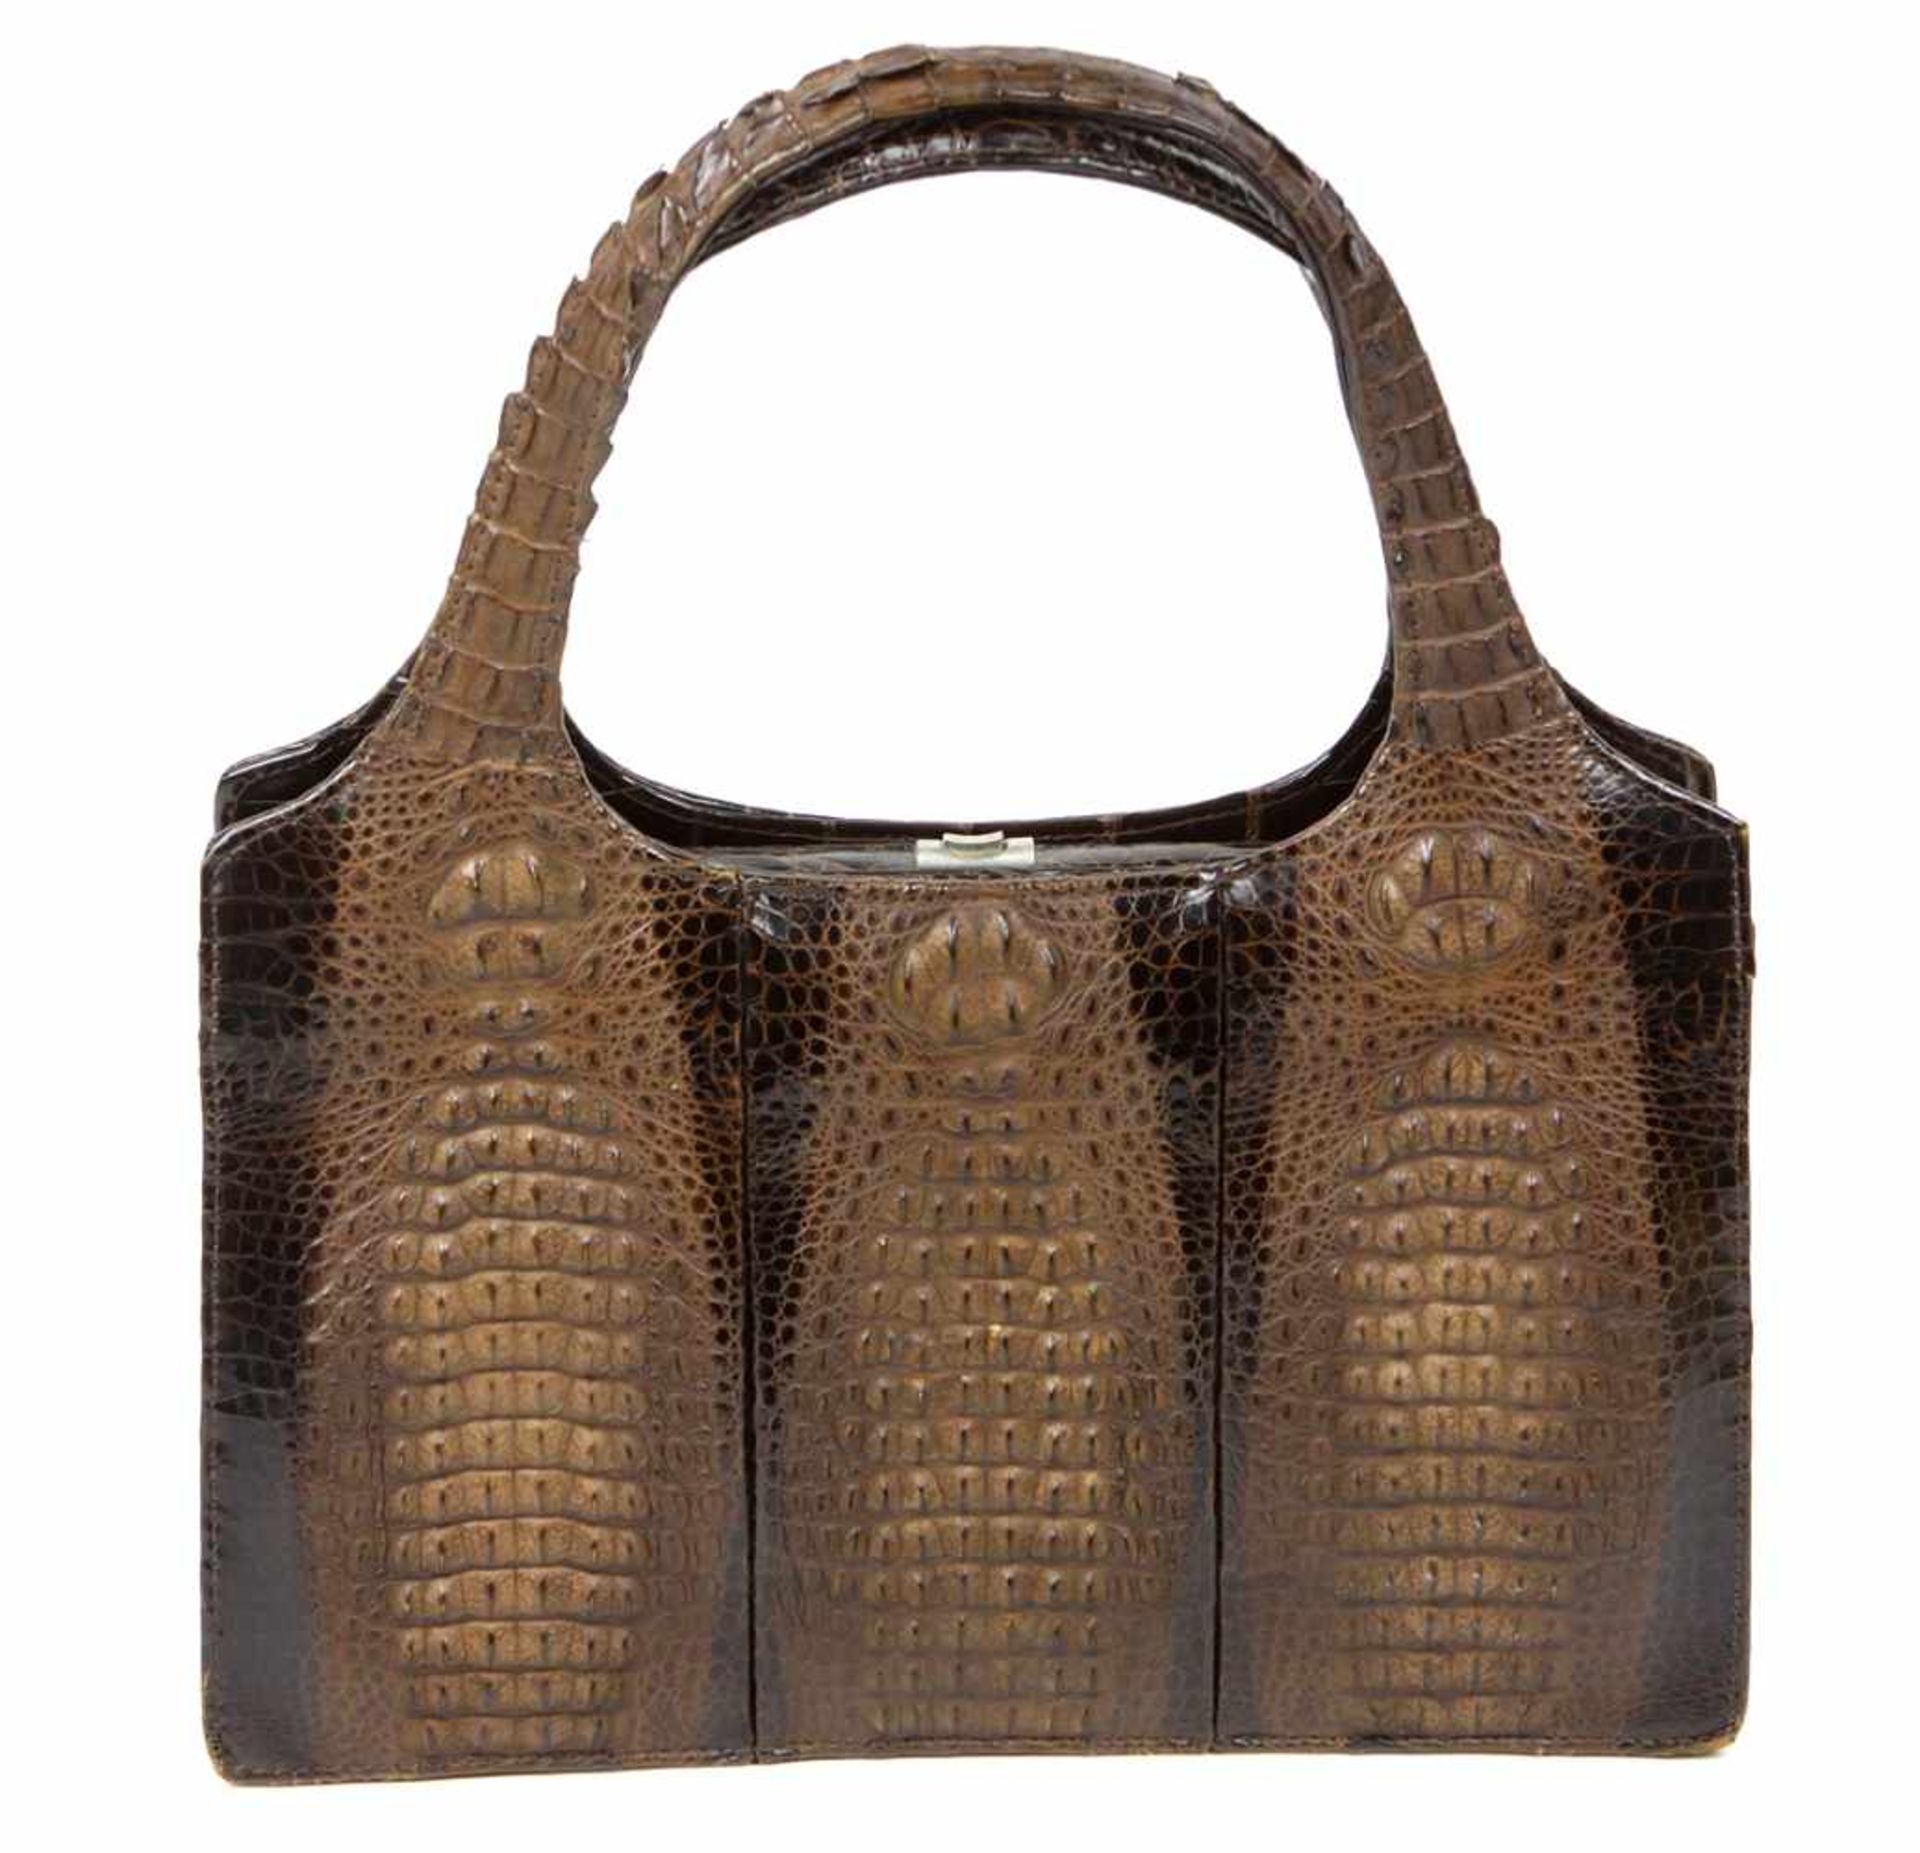 Kelly Bag 1930er JahreDamenhandtasche in rechteckiger Form, dunkelbraunes Krokoleder, 2 feste